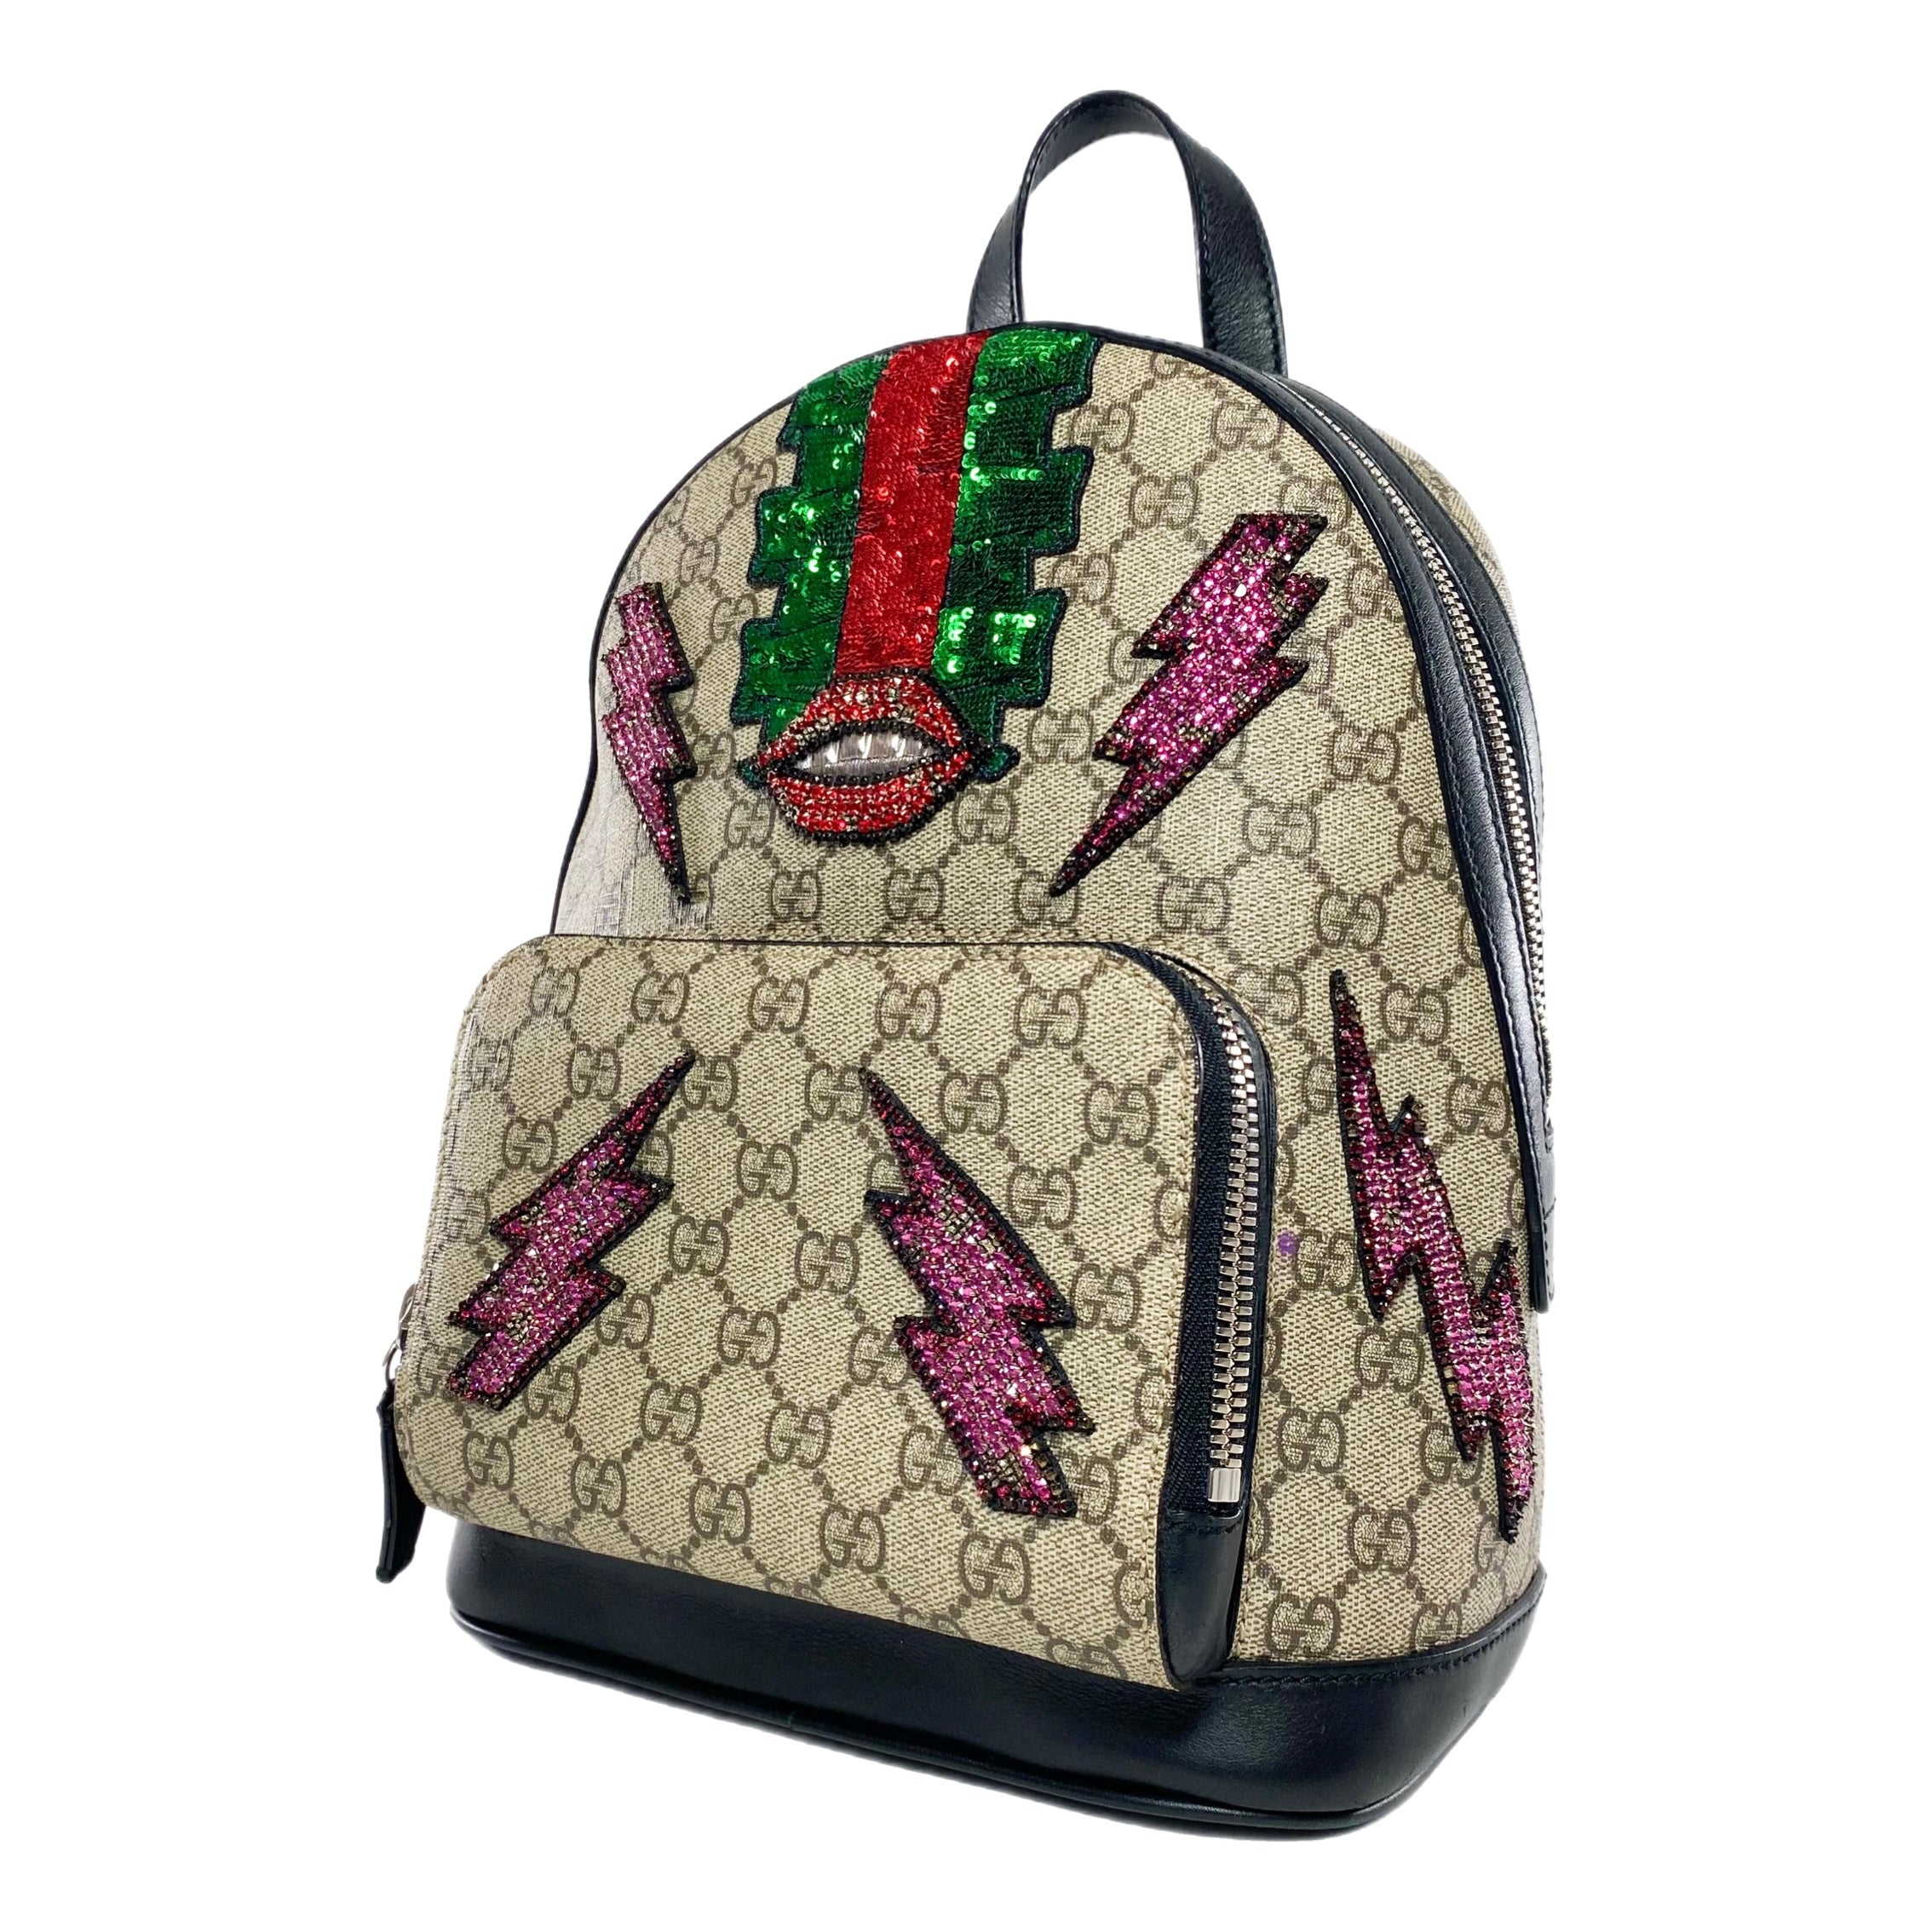 Gucci GG Supreme Monogram Embroidered Backpack